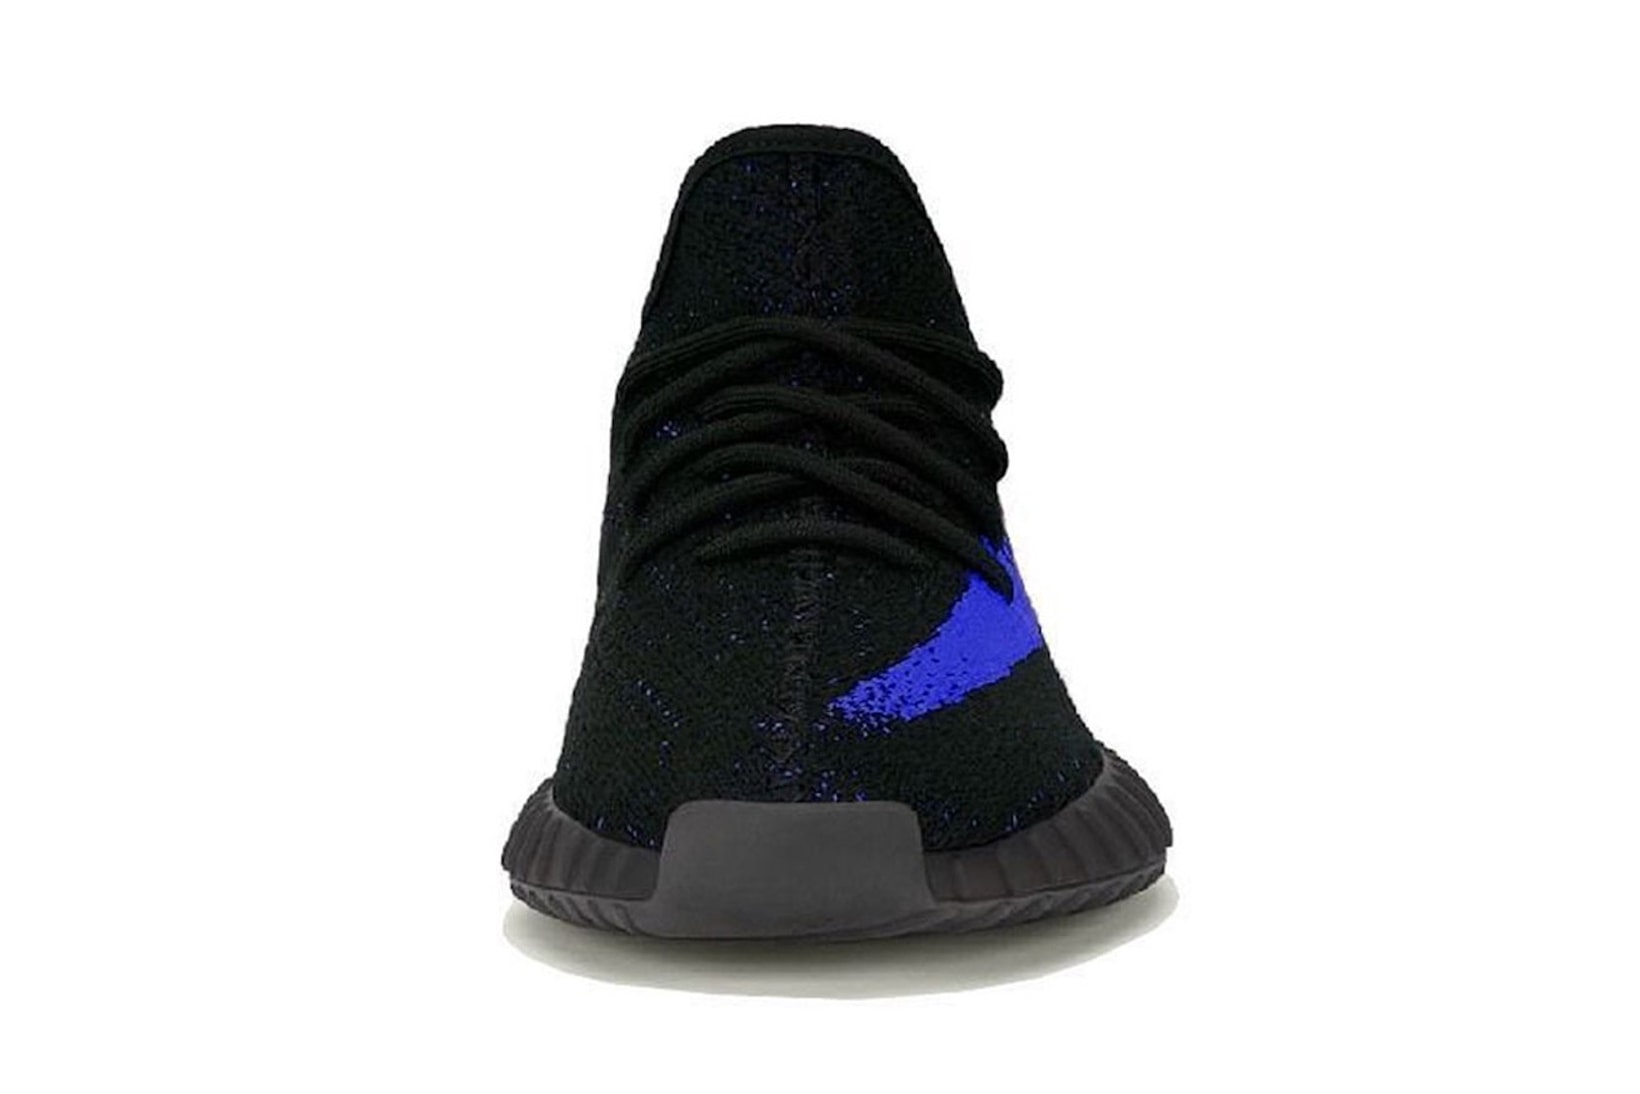 adidas YEEZY BOOST 350 V2 Dazzling Blue Kanye West Sneakers Footwear Shoes Kicks Black Front